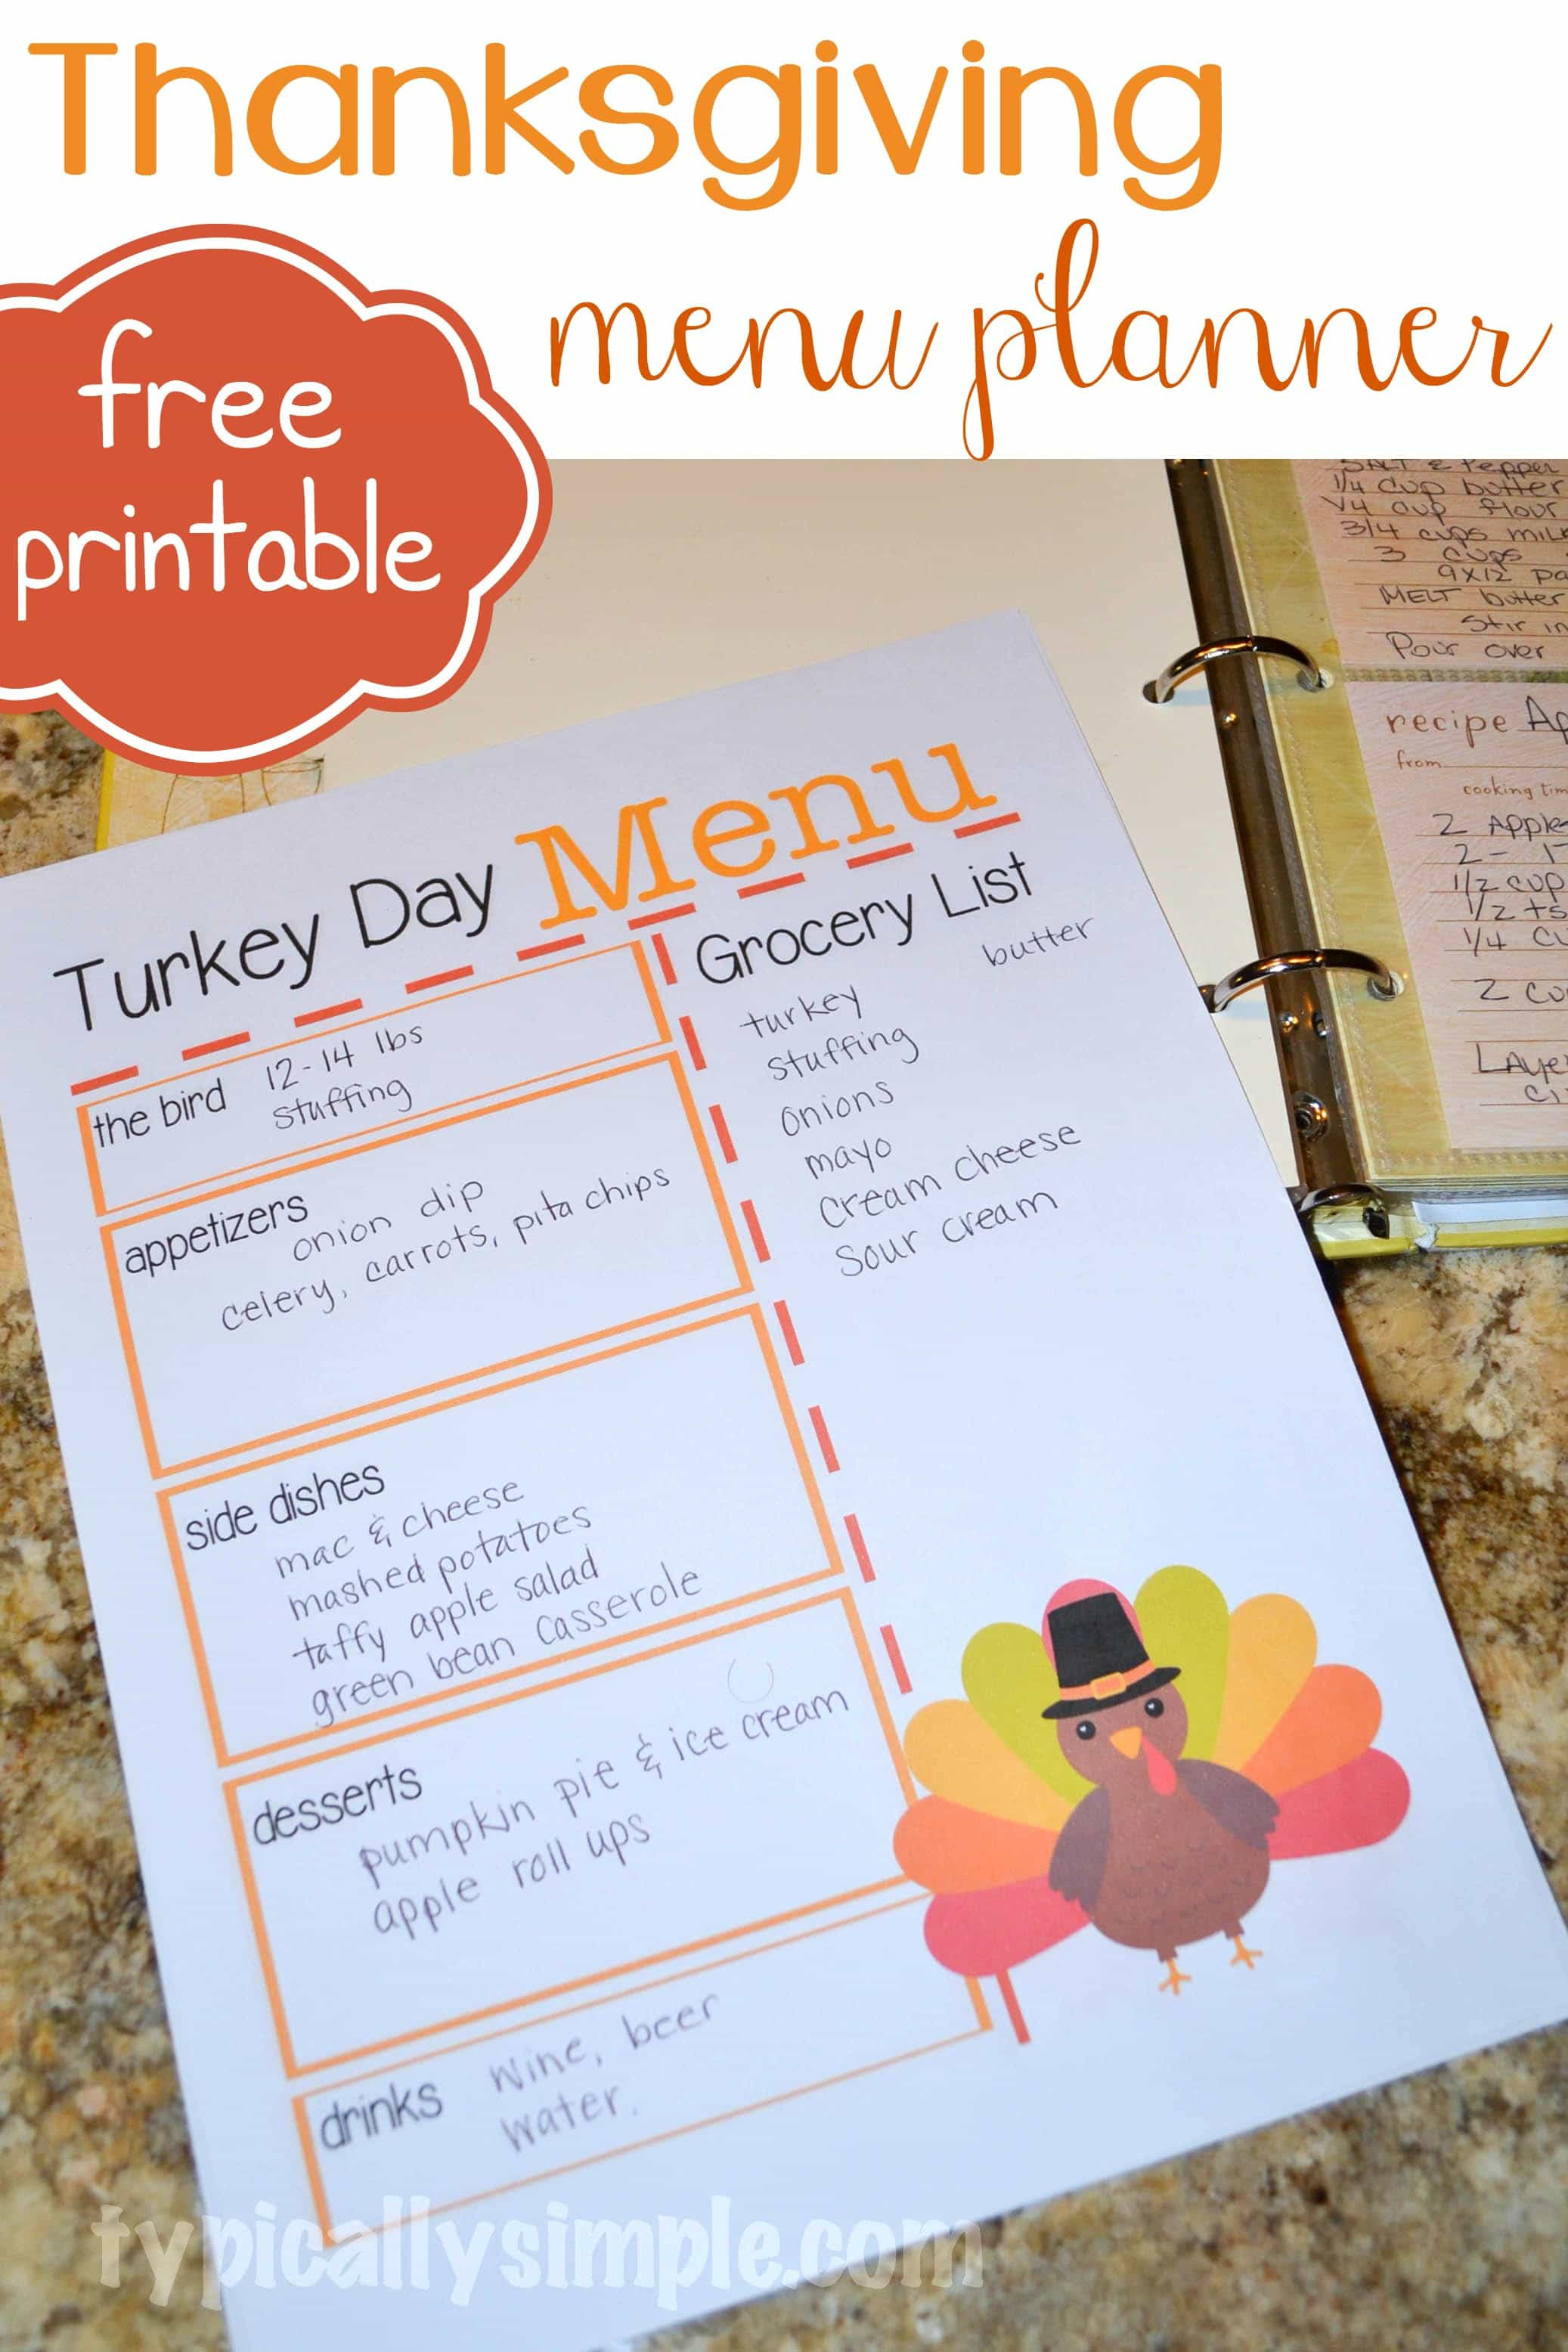 Thanksgiving Dinner Menu
 Turkey Day Menu Planner Typically Simple